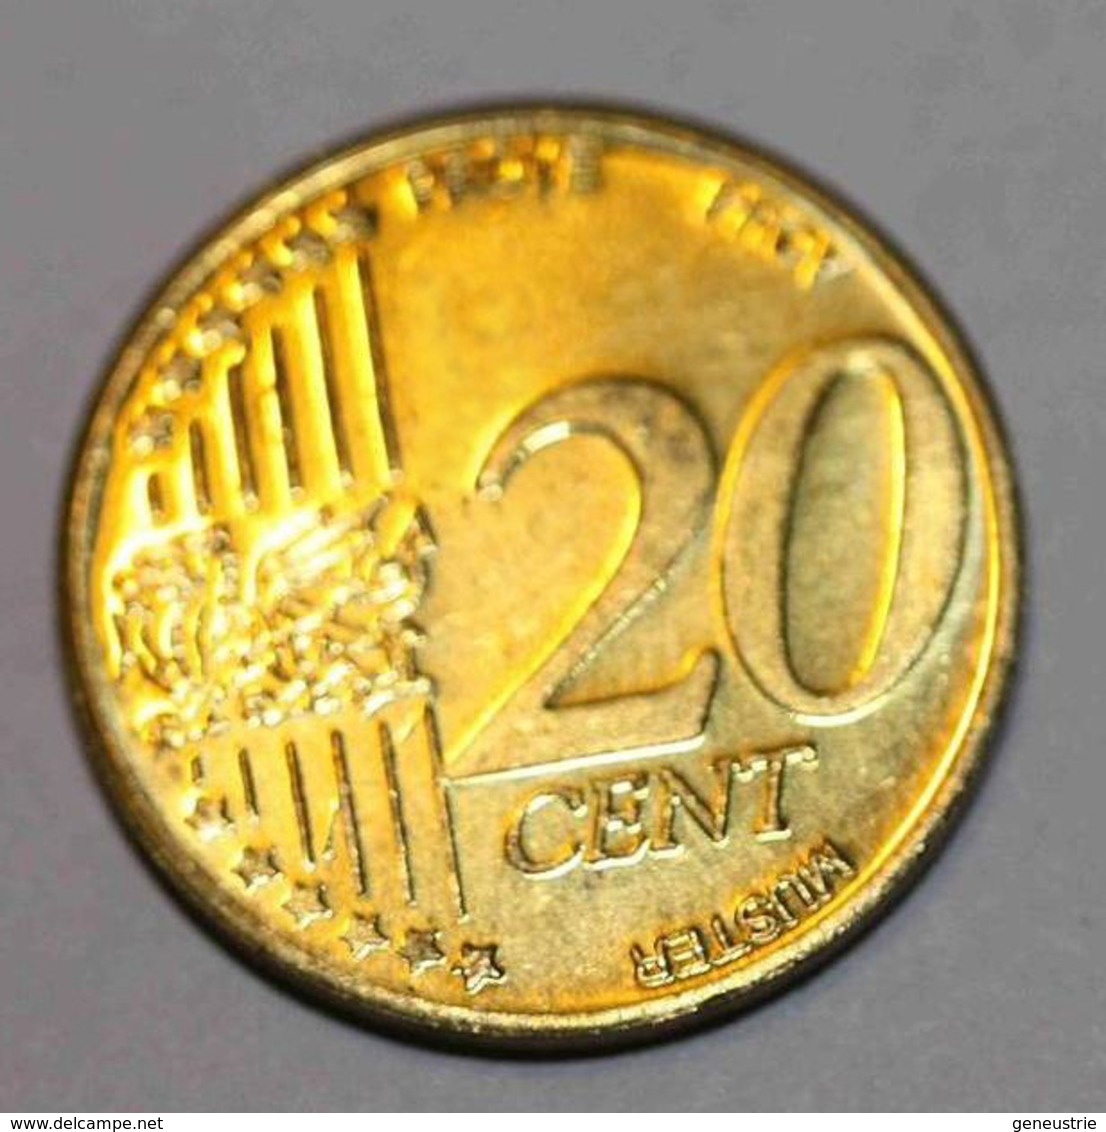 Wales - Pays De Galles 2004 BU EURO PATTERN EURO ESSAI 20 Cents - 20 Euro Cent - Pruebas Privadas